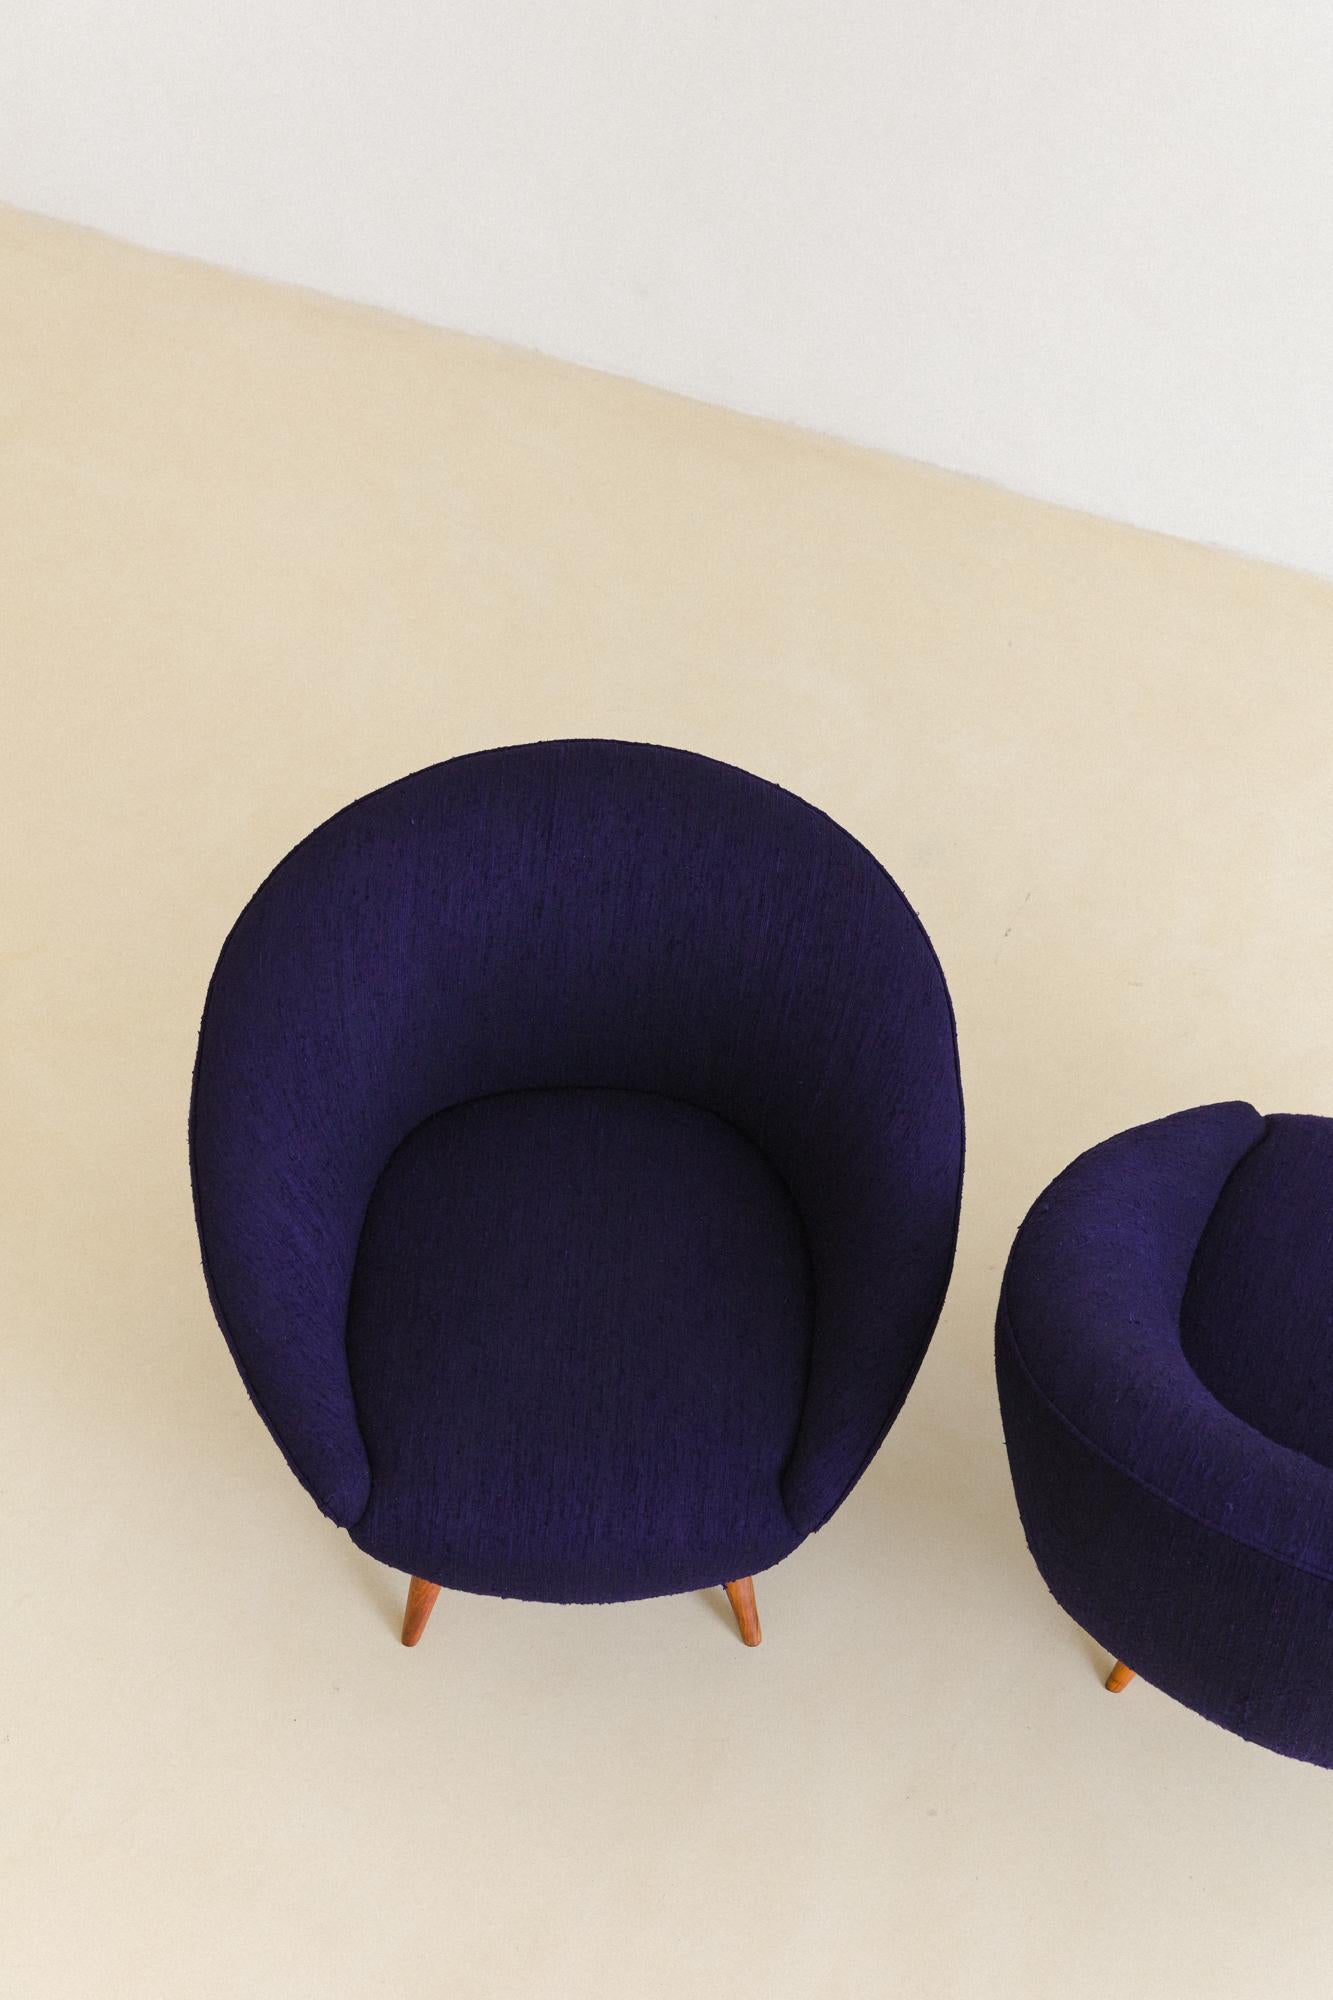 Brazilian Midcentury Design, Round Armchairs, Organic Silk Upholstery, 1950s For Sale 8